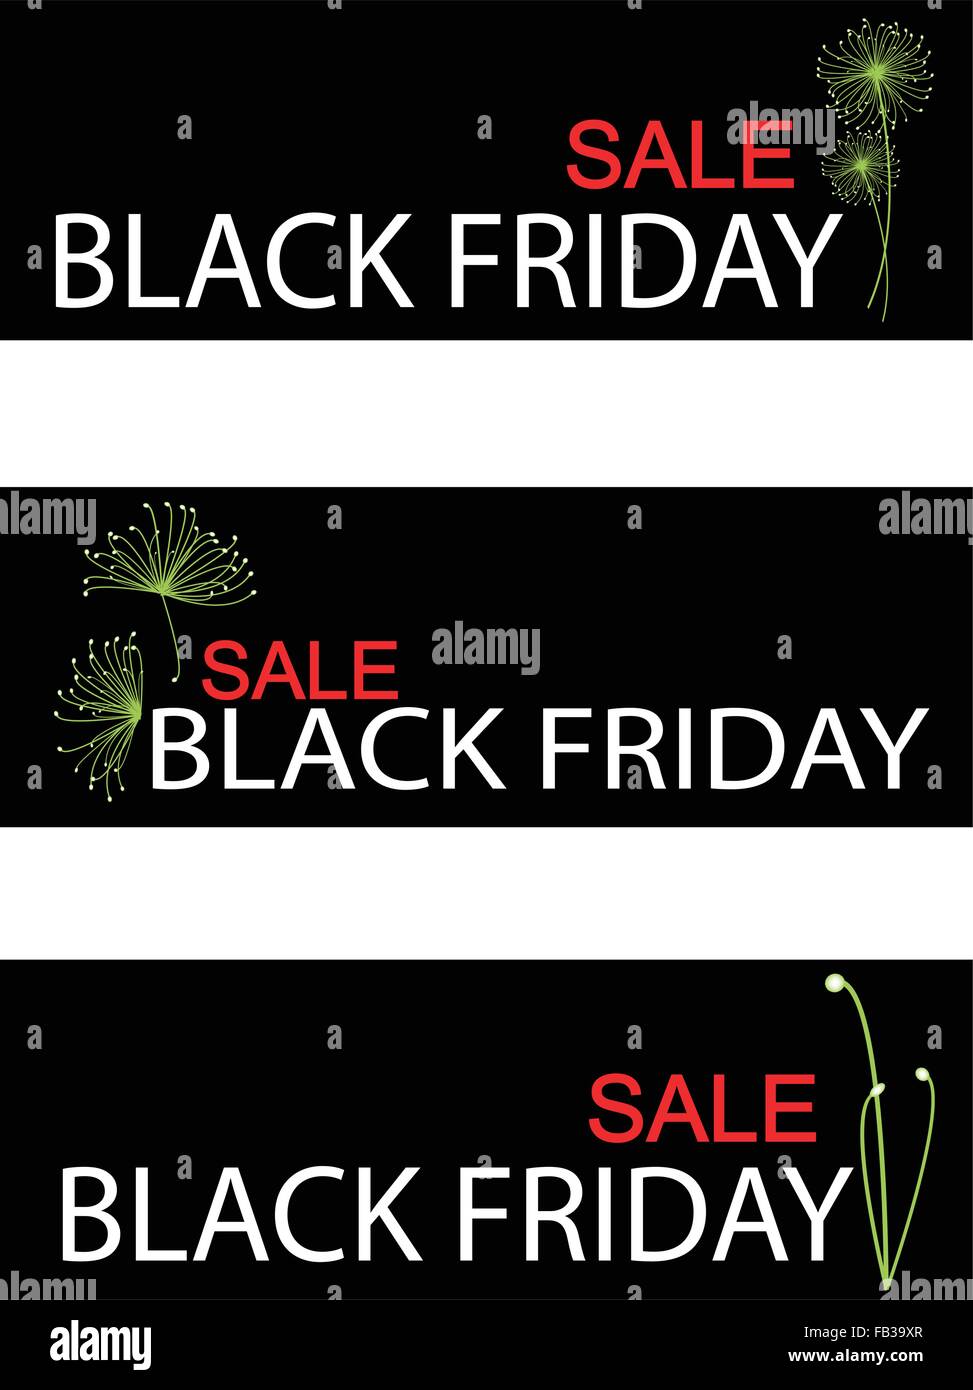 Illustration of Cyperus Papyrus or Cyperaceae Plants on Black Friday Shopping Banner for Start Christmas Shopping Season. Stock Vector